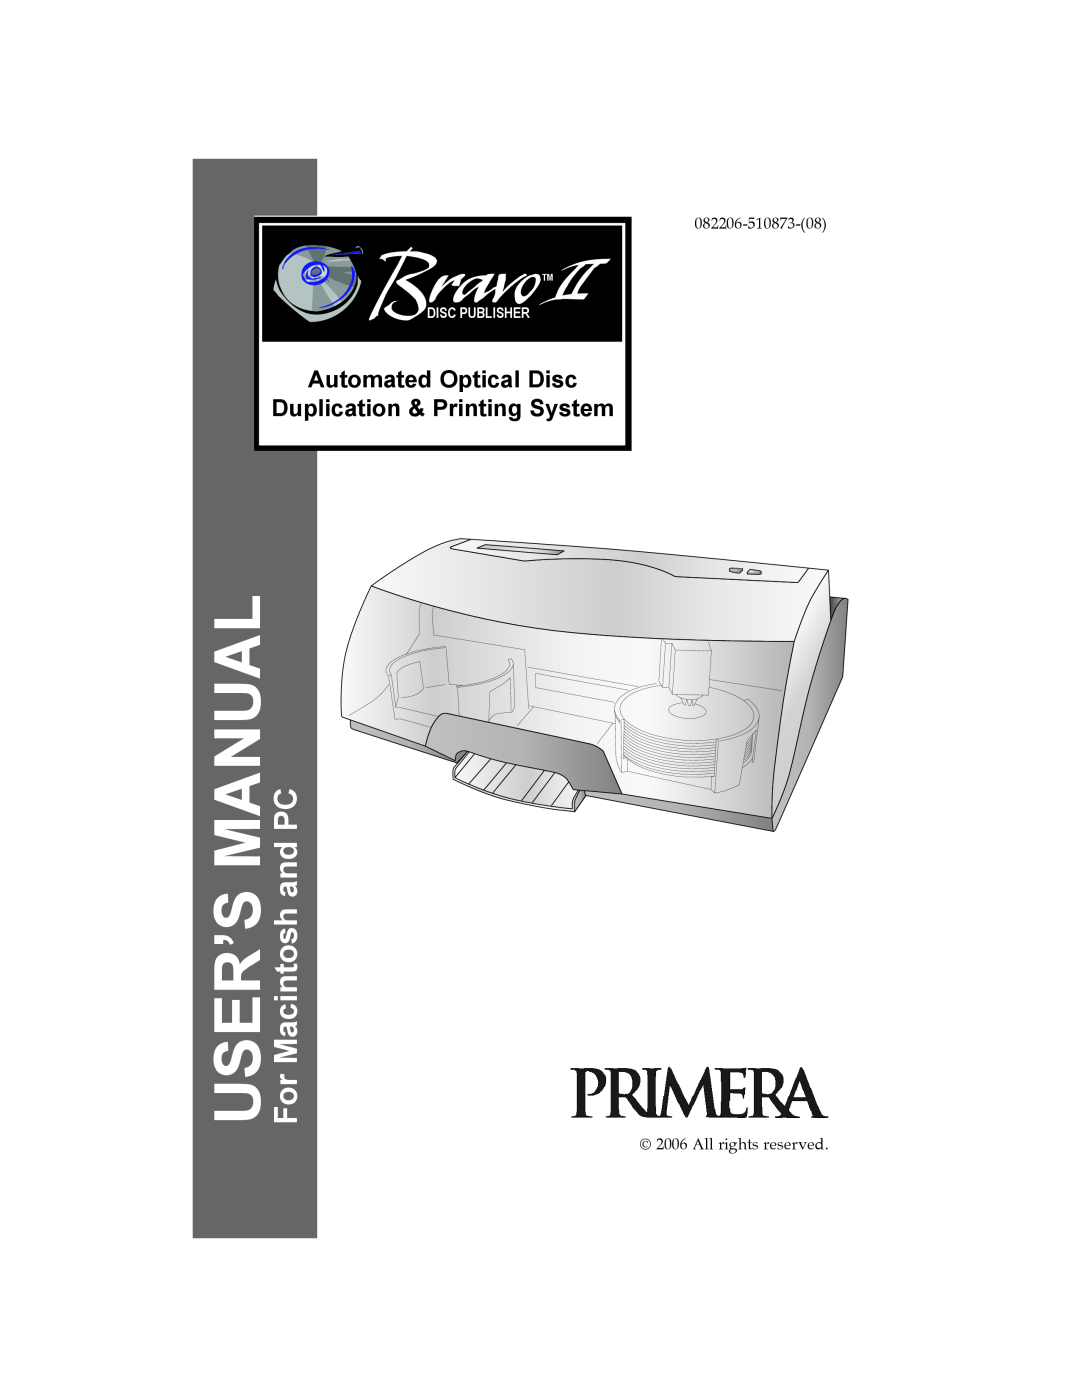 Primera Technology II user manual For Macintosh, System, AutoAutomatedt Opticali Disc, Duplicationupli ti & Printingi 